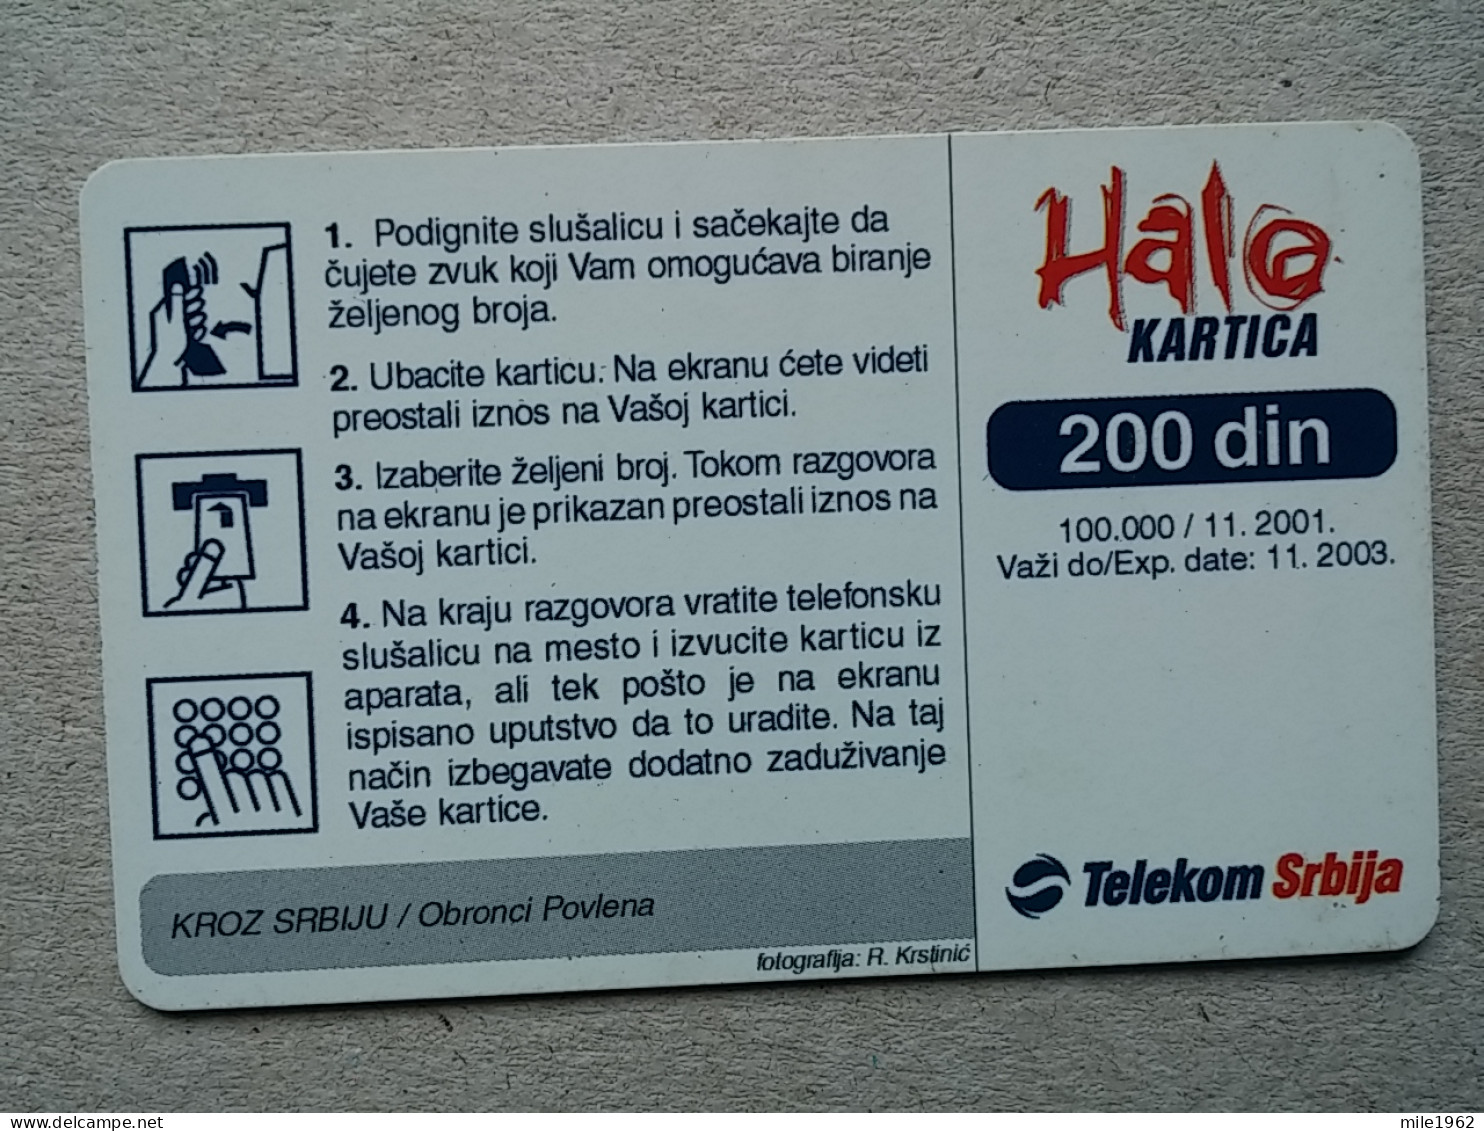 T-566 - SERBIA, Telecard, Télécarte, Phonecard, Halo Kartica - Yougoslavie